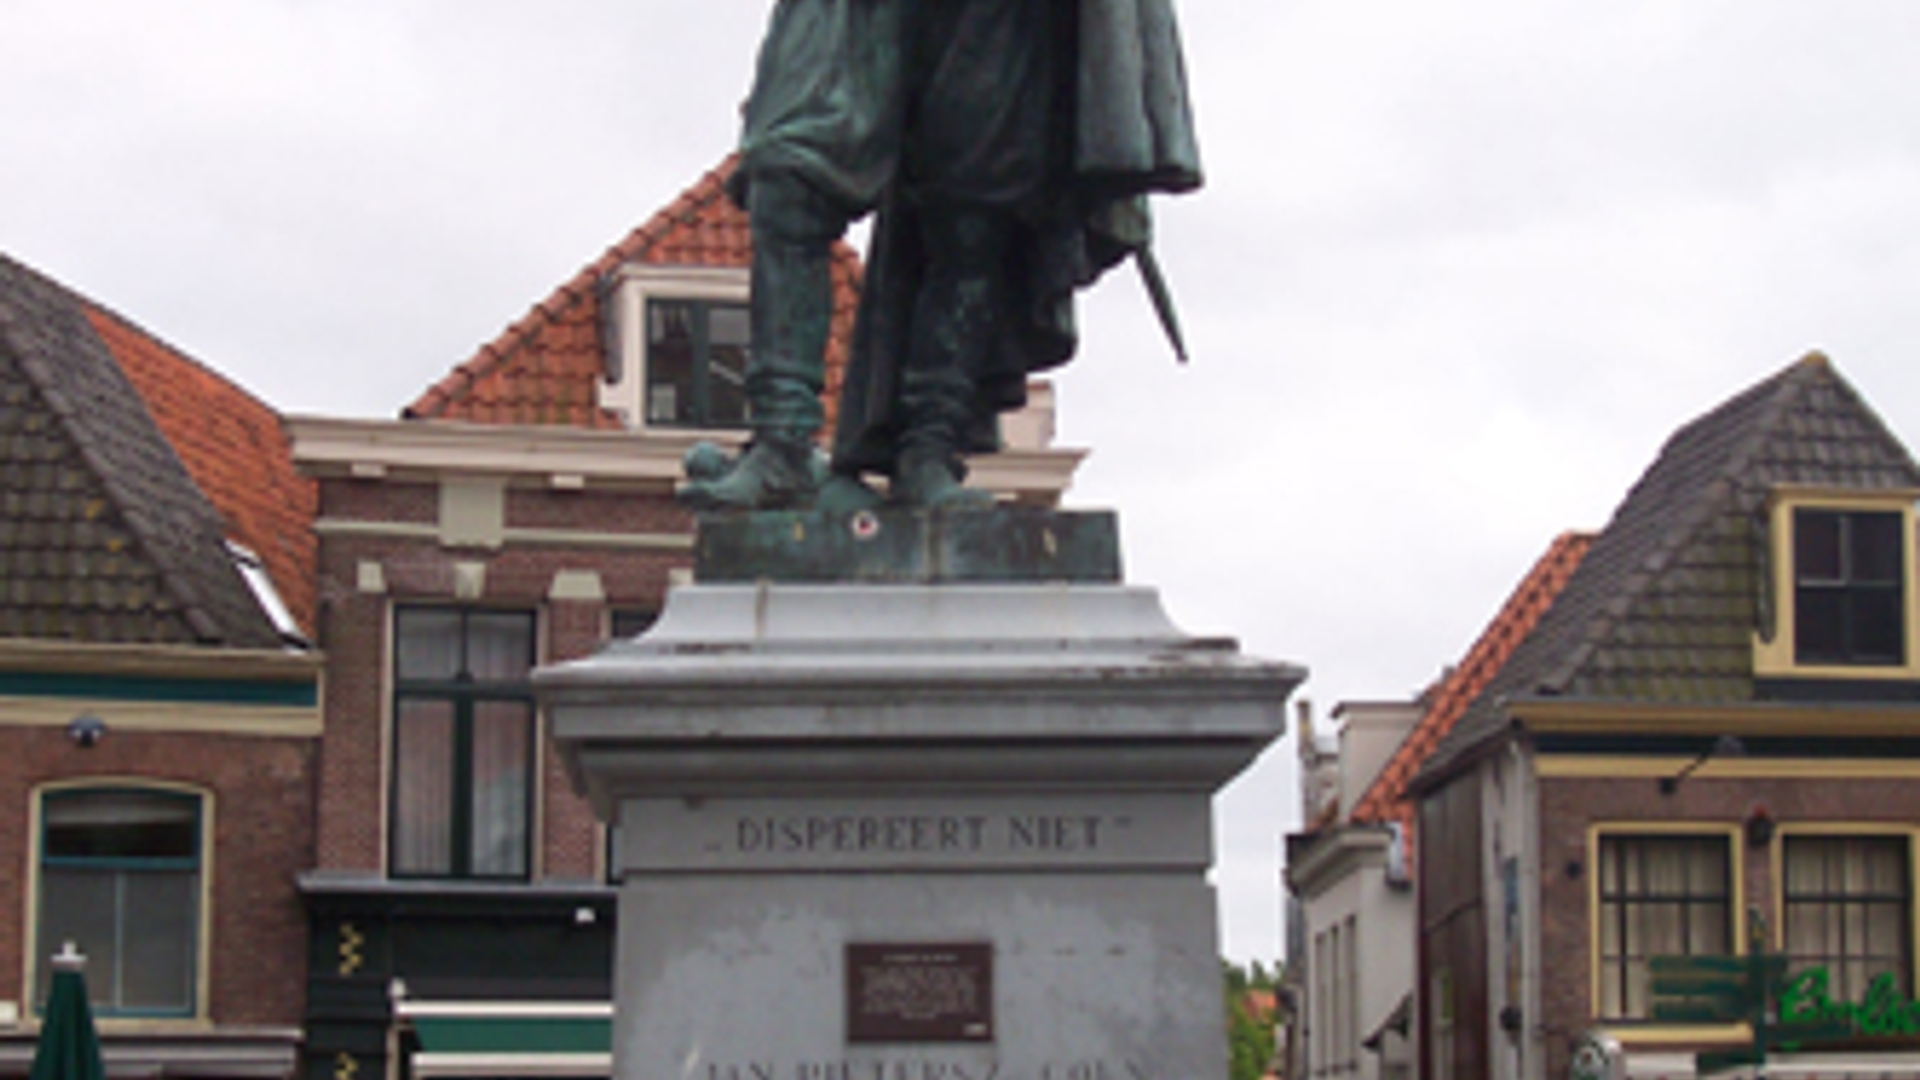 Jan_Pieterszoon_Coen_statue